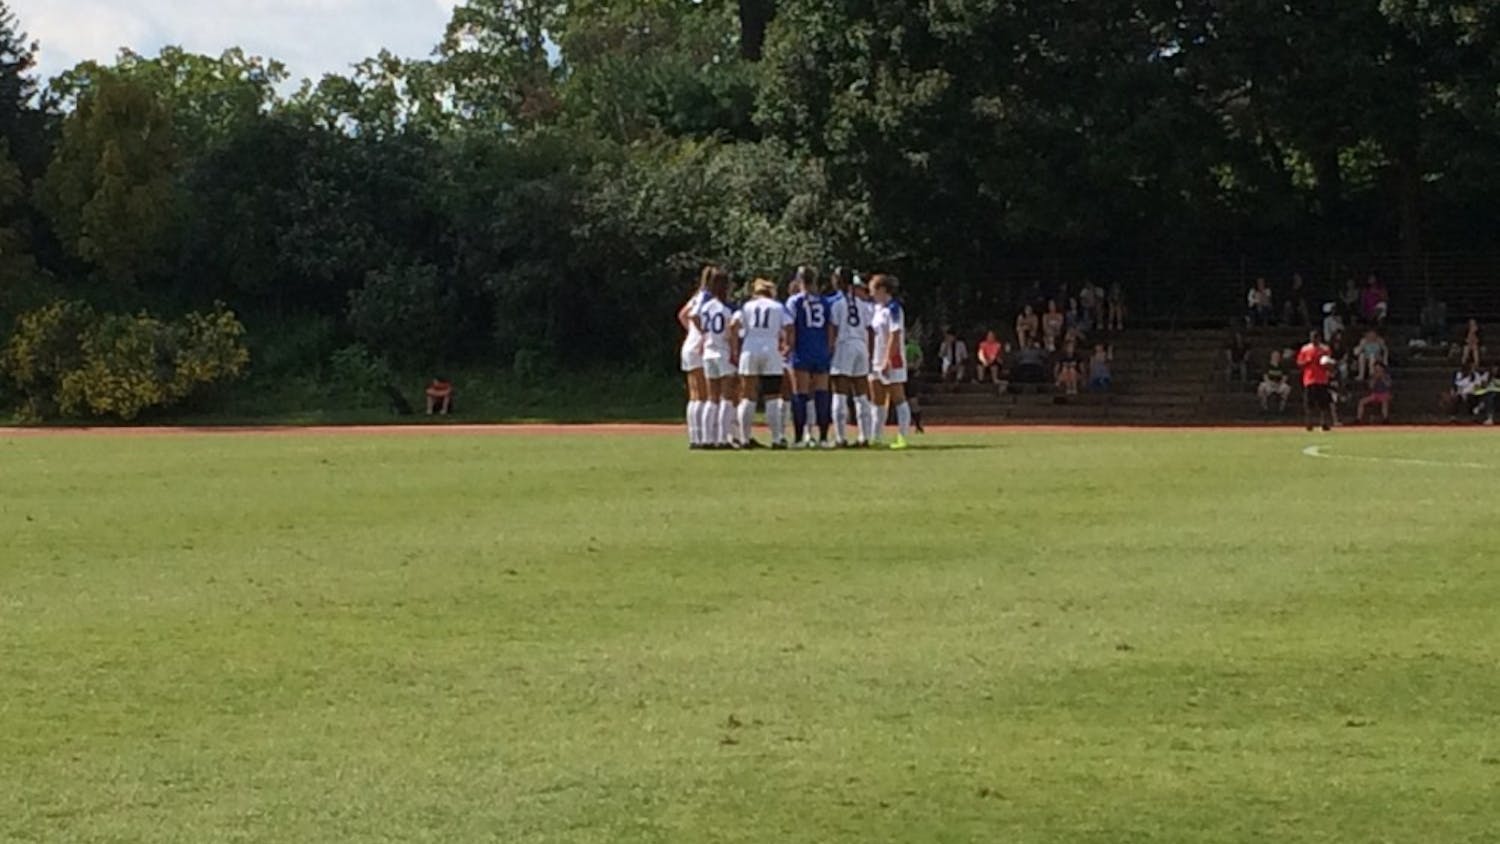 The AU women's soccer team huddles before their match against George Washington University on Sept. 3